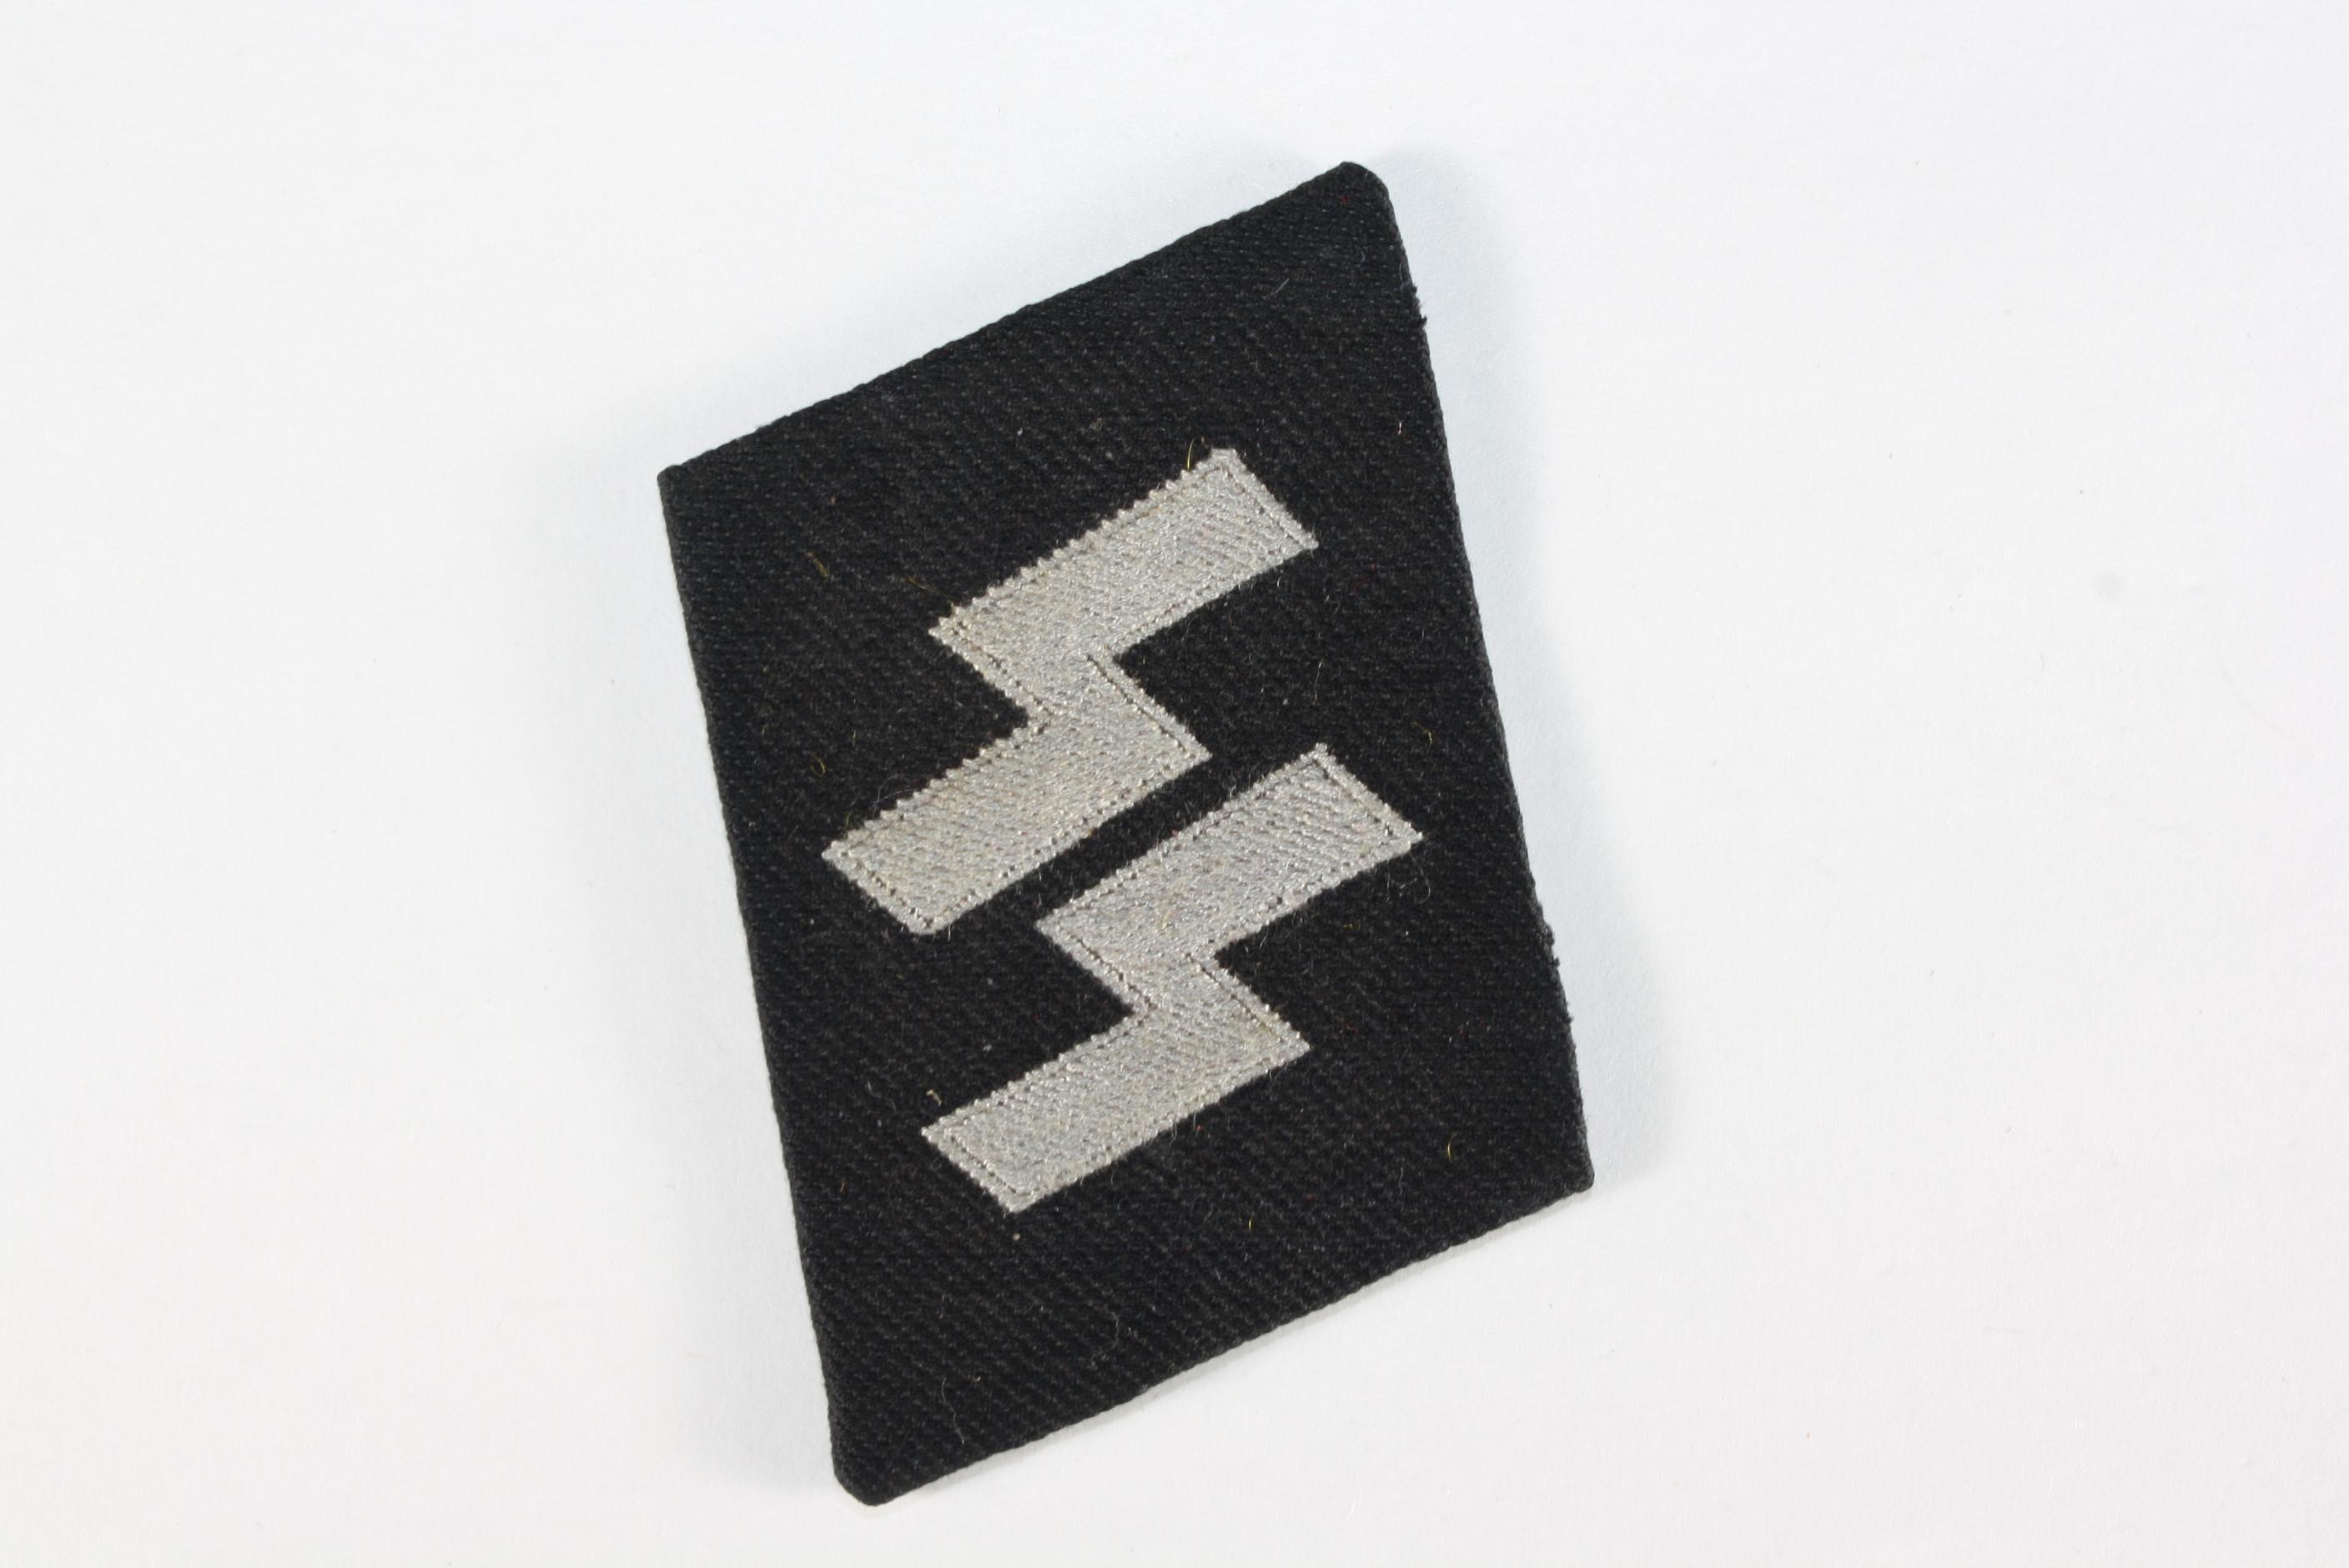 Rare!  Original WWII Nazi SS collar tab.